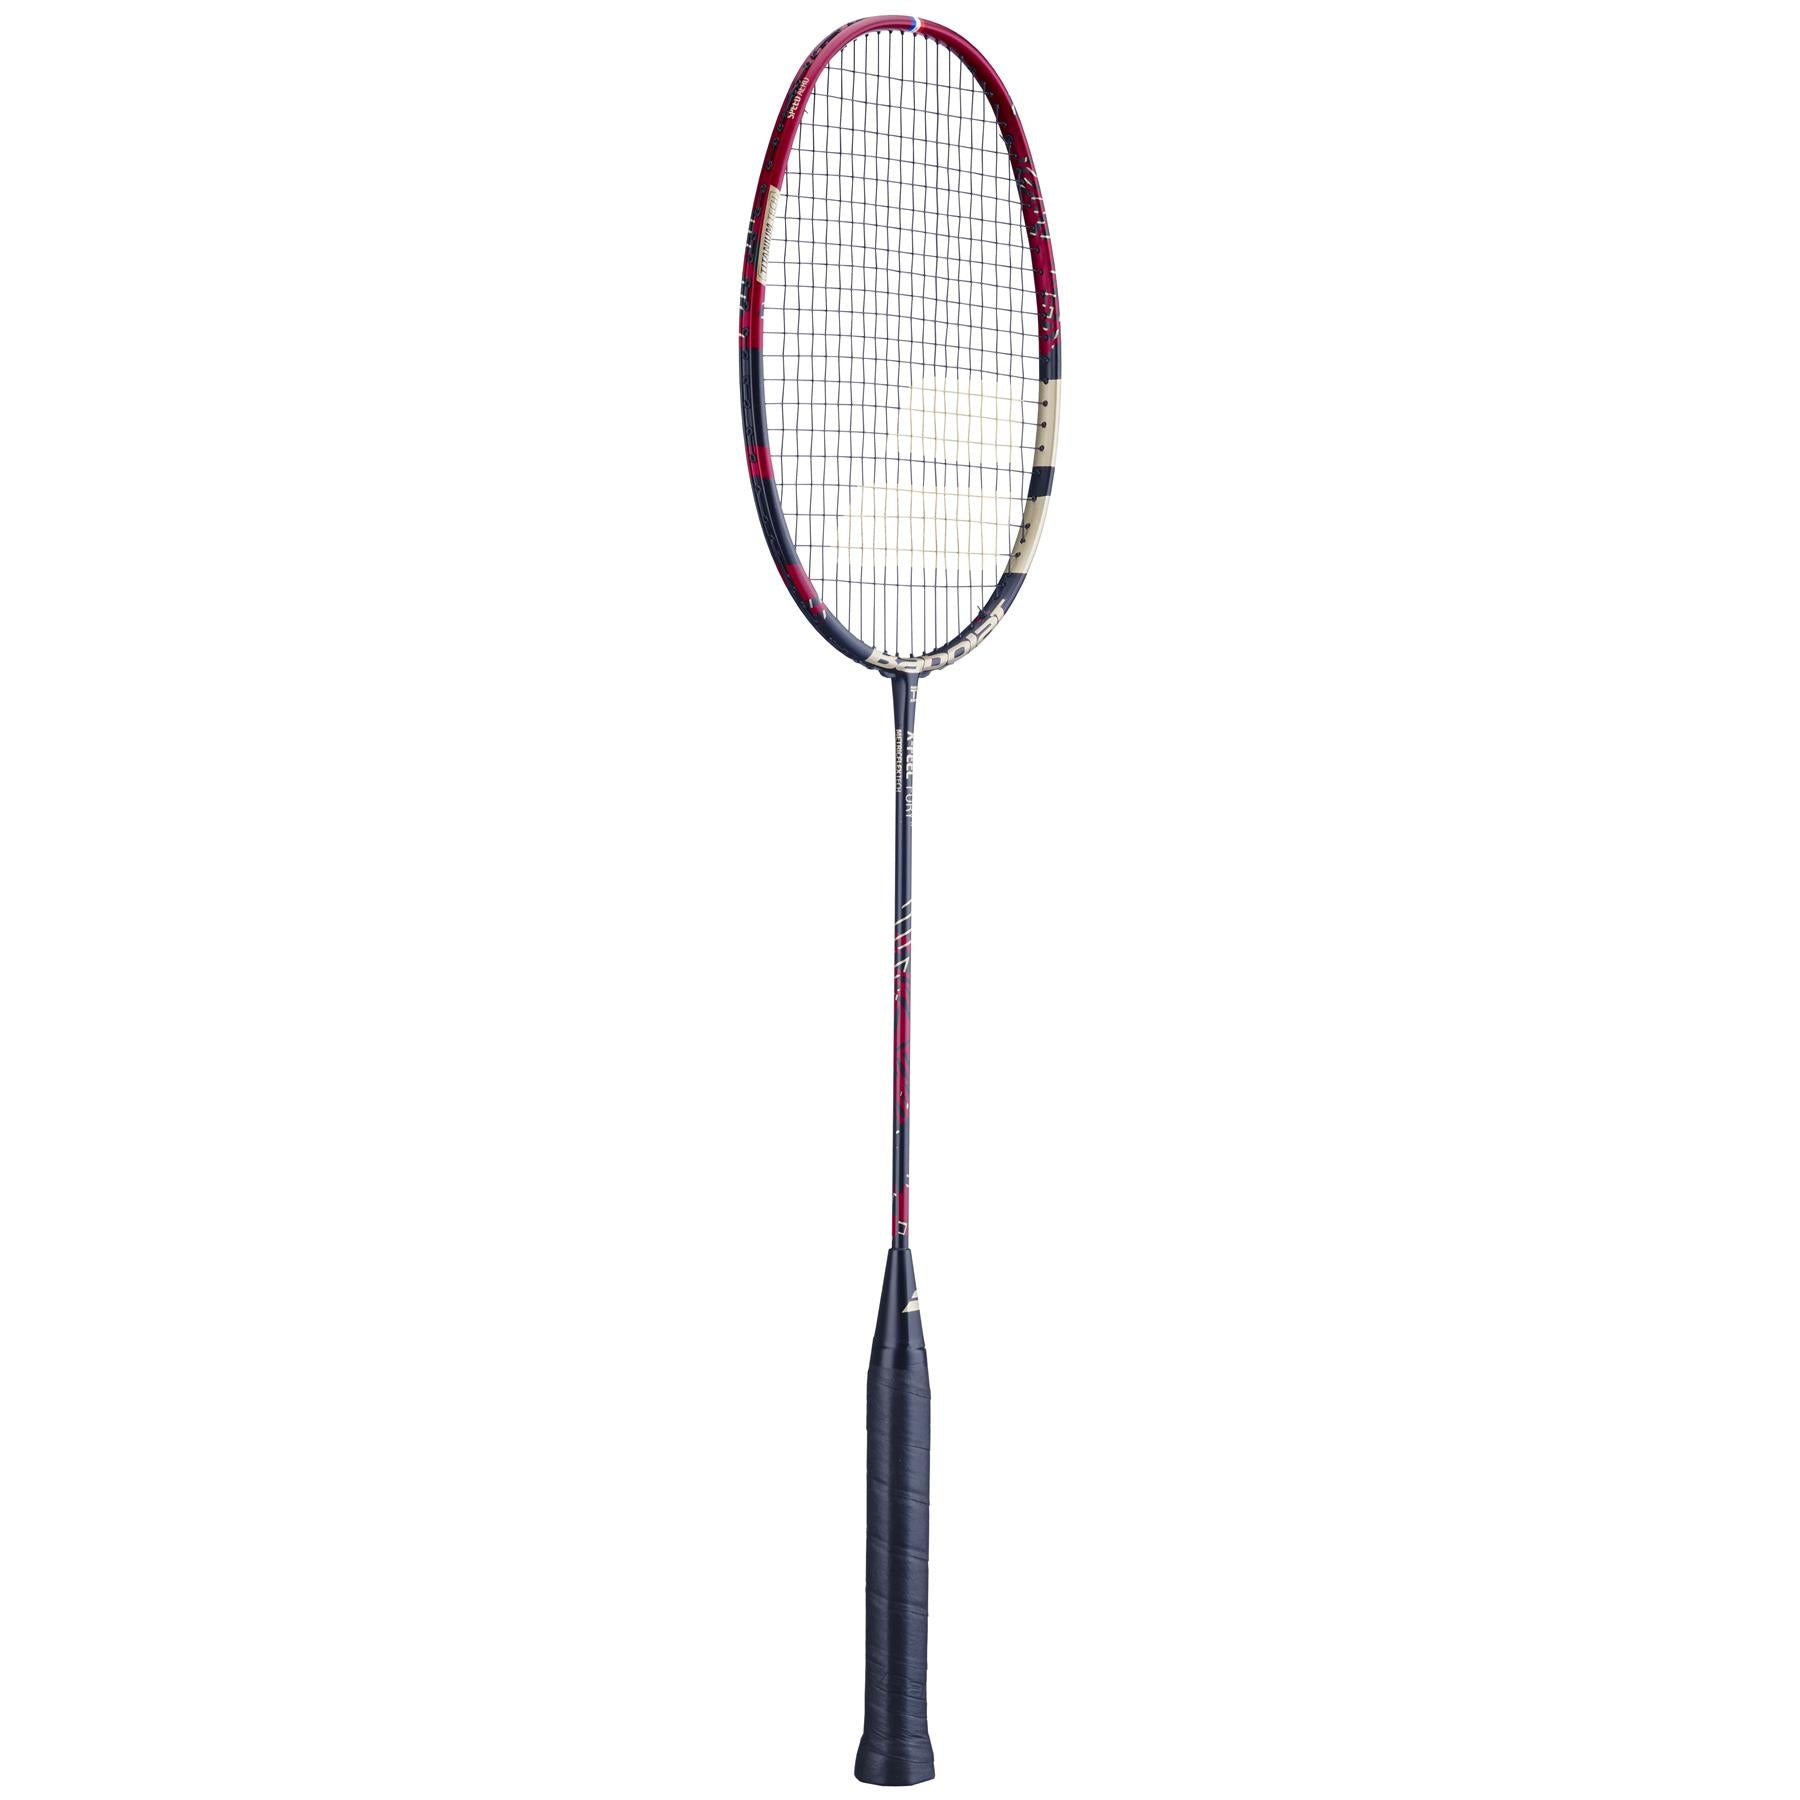 Babolat X-Feel Fury Badminton Racket - Red / Black - Right